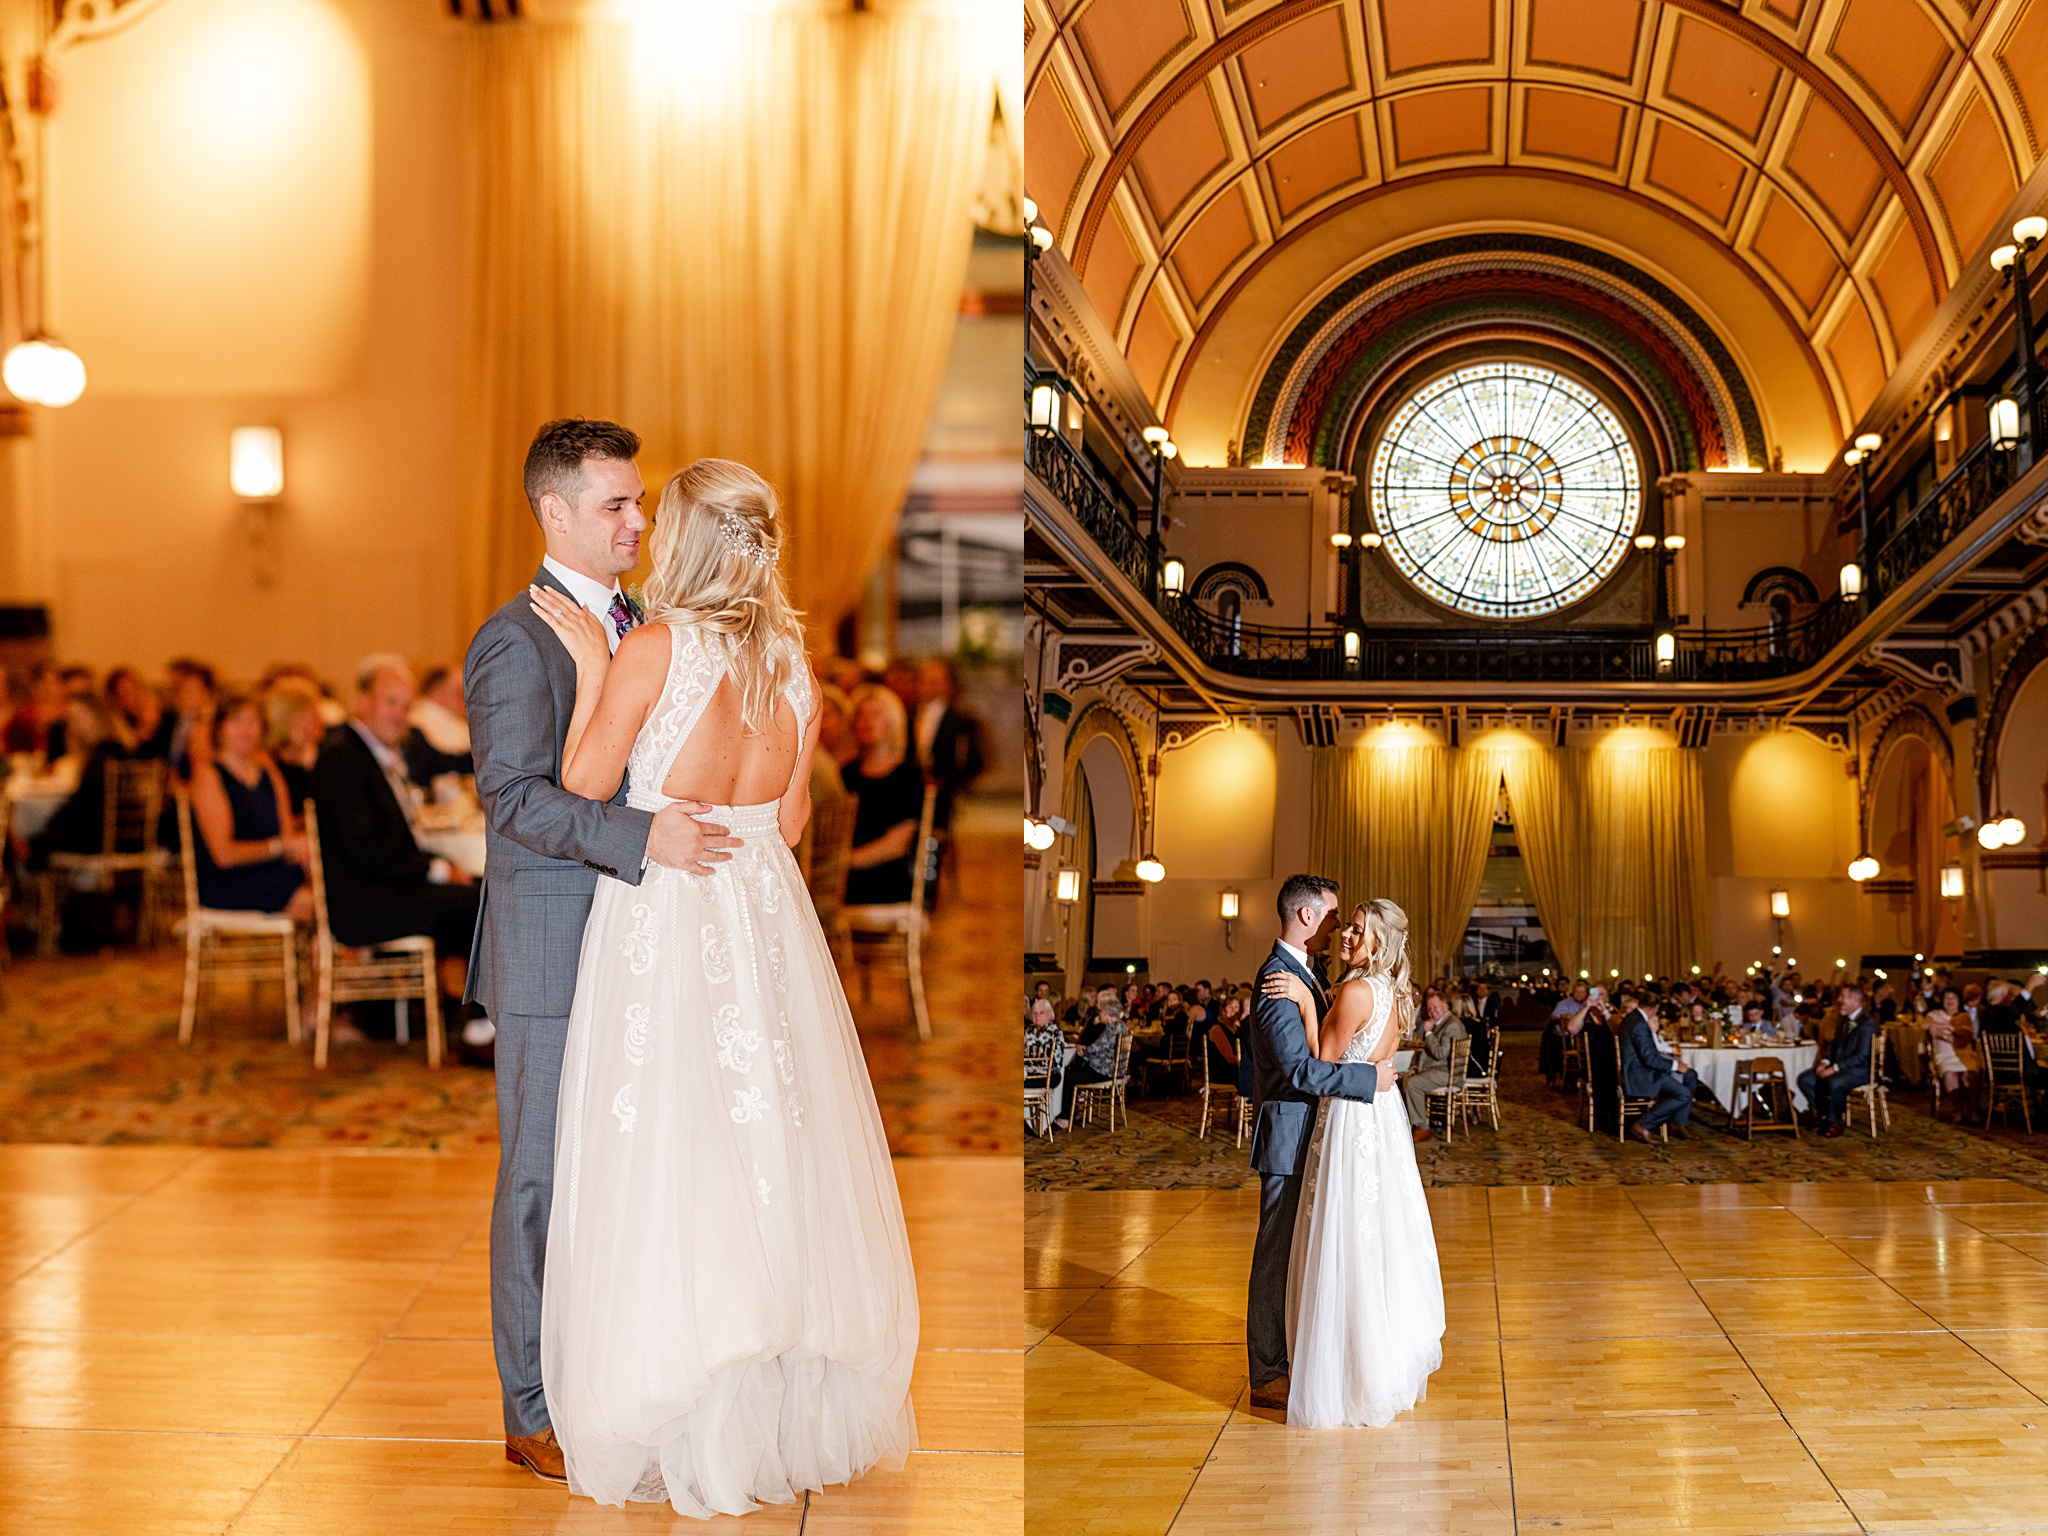 Indianapolis Union Station Wedding | Downtown Indianapolis | Ashley and ...